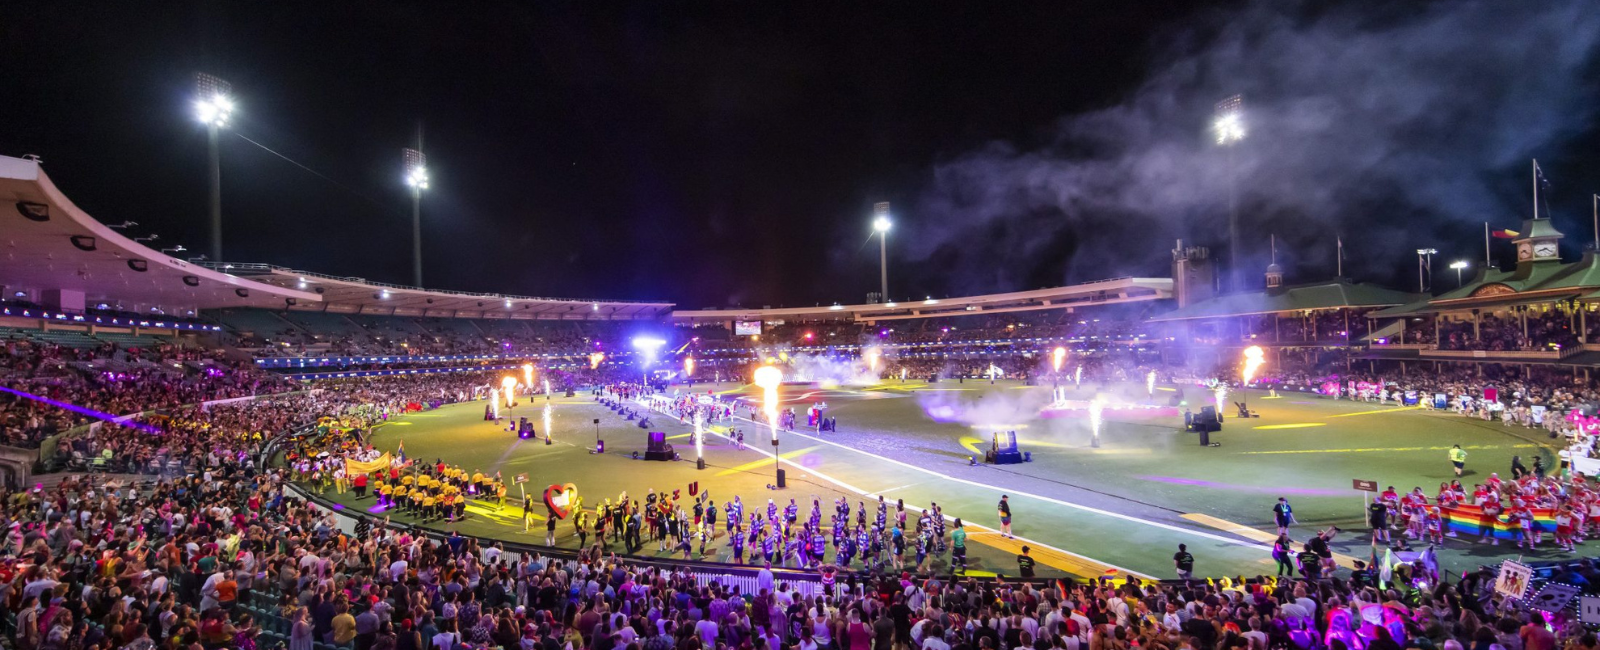 Stadium filled with people celebrating Mardi Gras Sydney